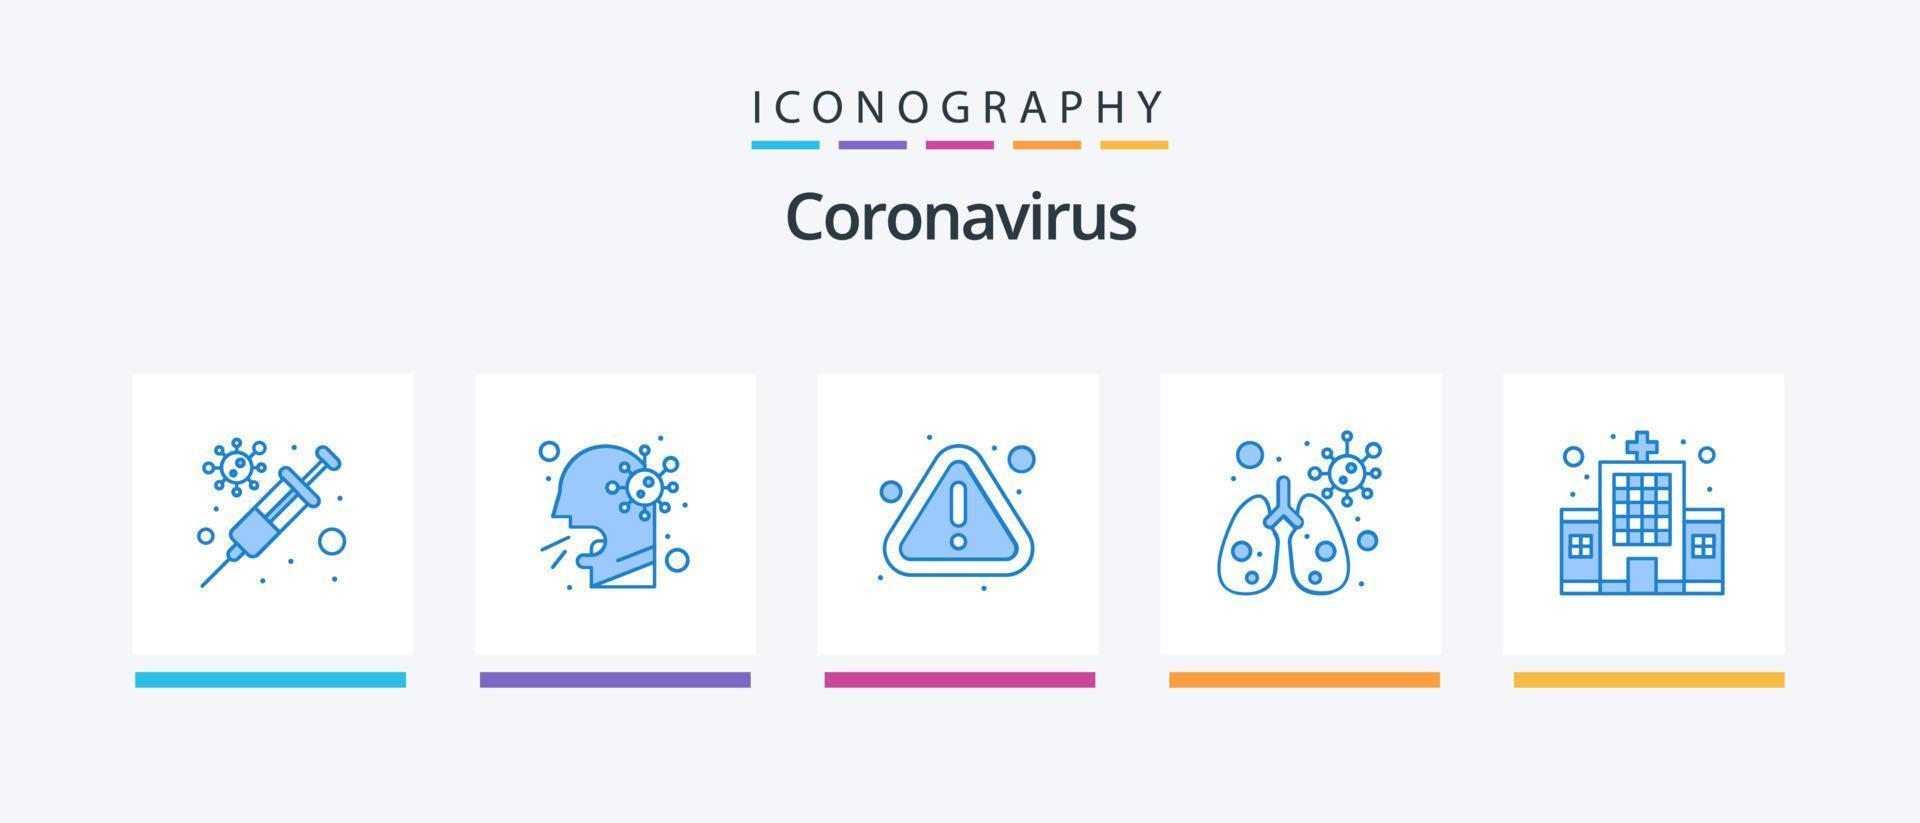 coronavirus azul 5 5 icono paquete incluso edificio. error. virus. anatomía. creativo íconos diseño vector